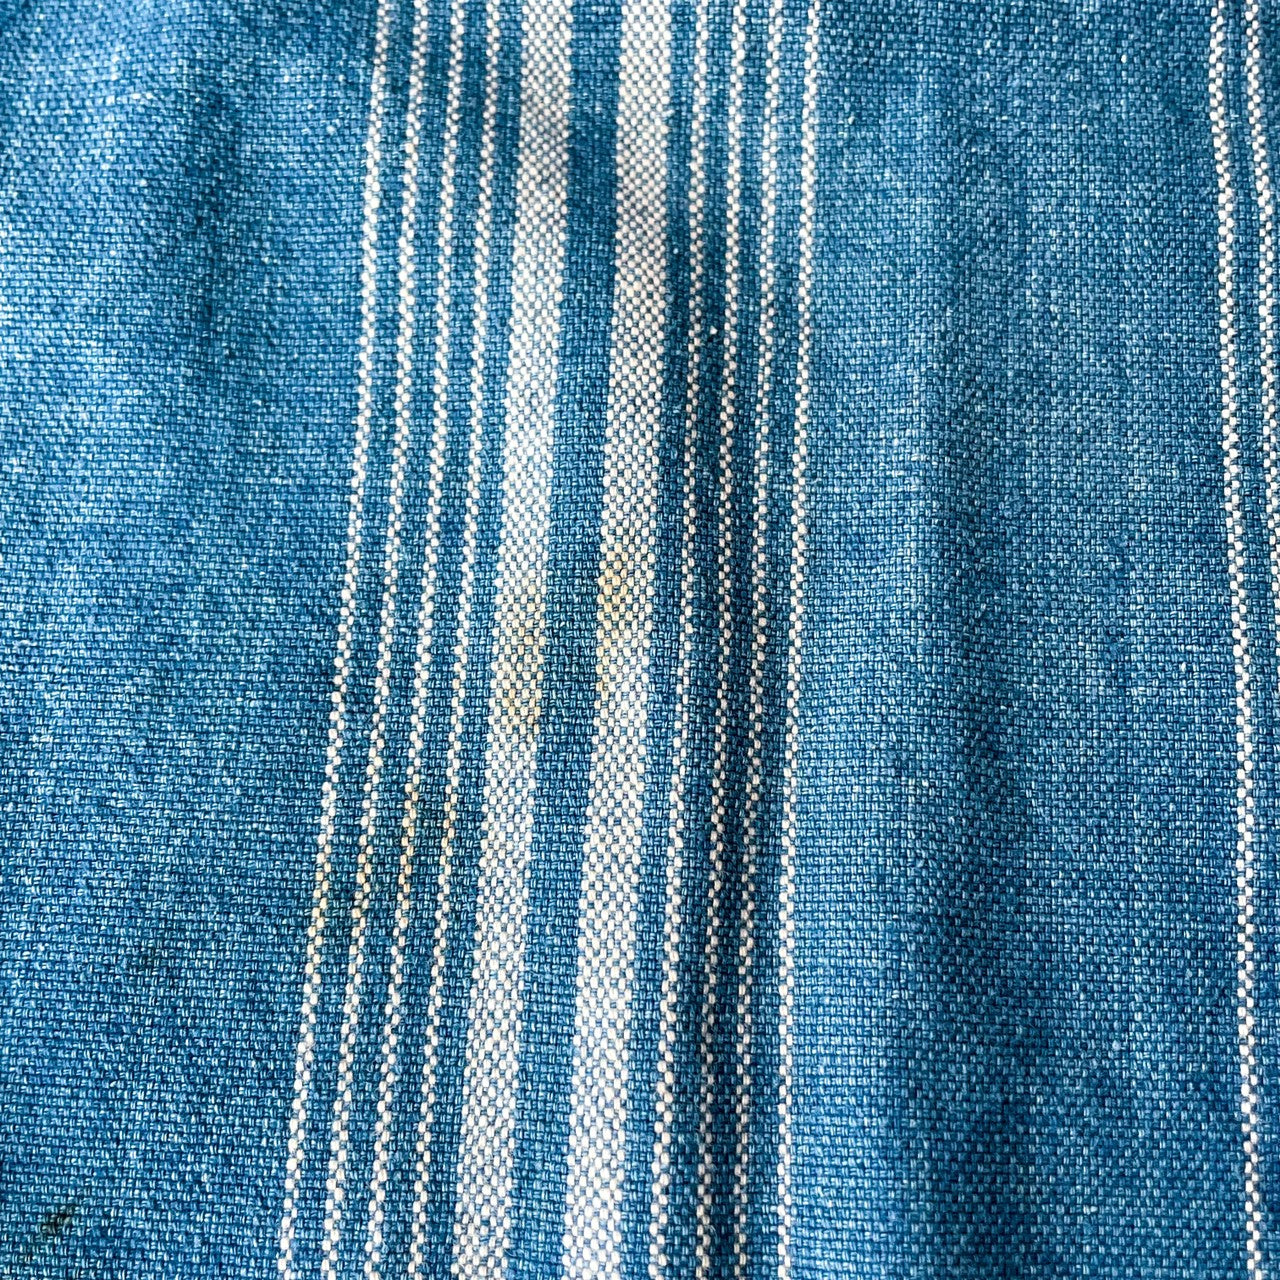 Guatemalan Indigo Blouse #3／グアテマラ ウィピル 刺繍 織り ブラウス トップス